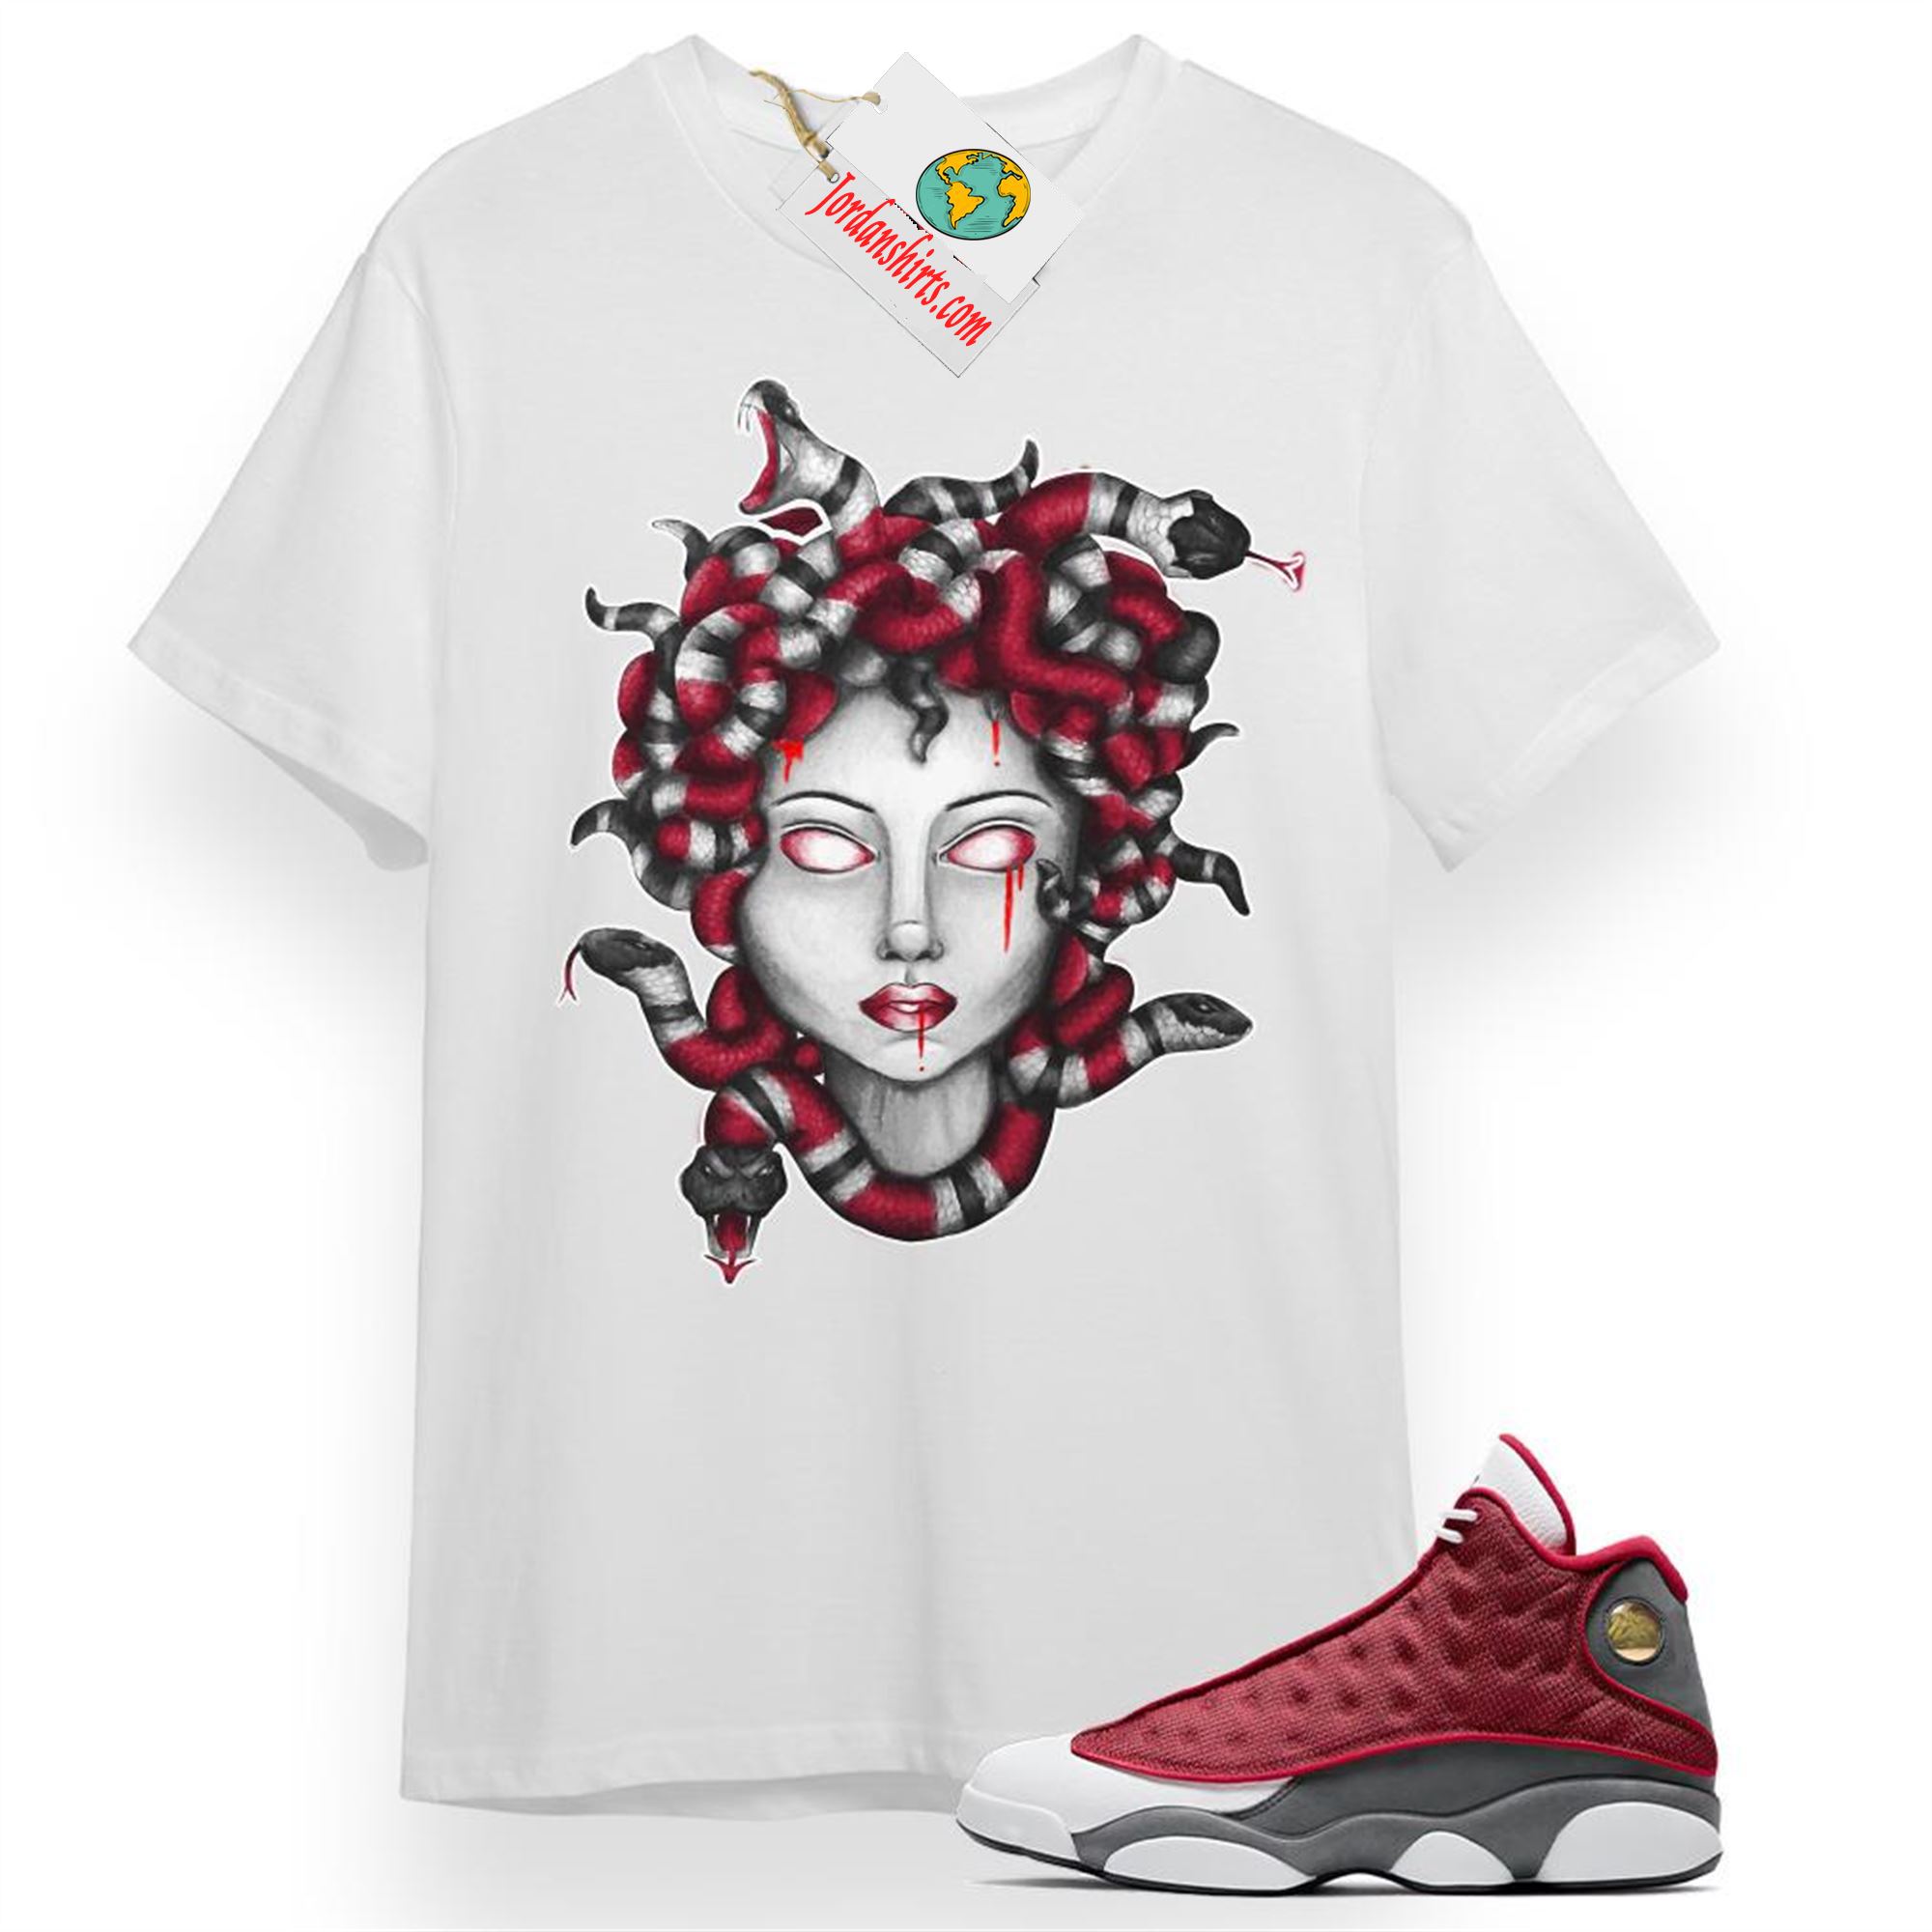 Jordan 13 Shirt, Medusa Snake White T-shirt Air Jordan 13 Red Flint 13s Size Up To 5xl